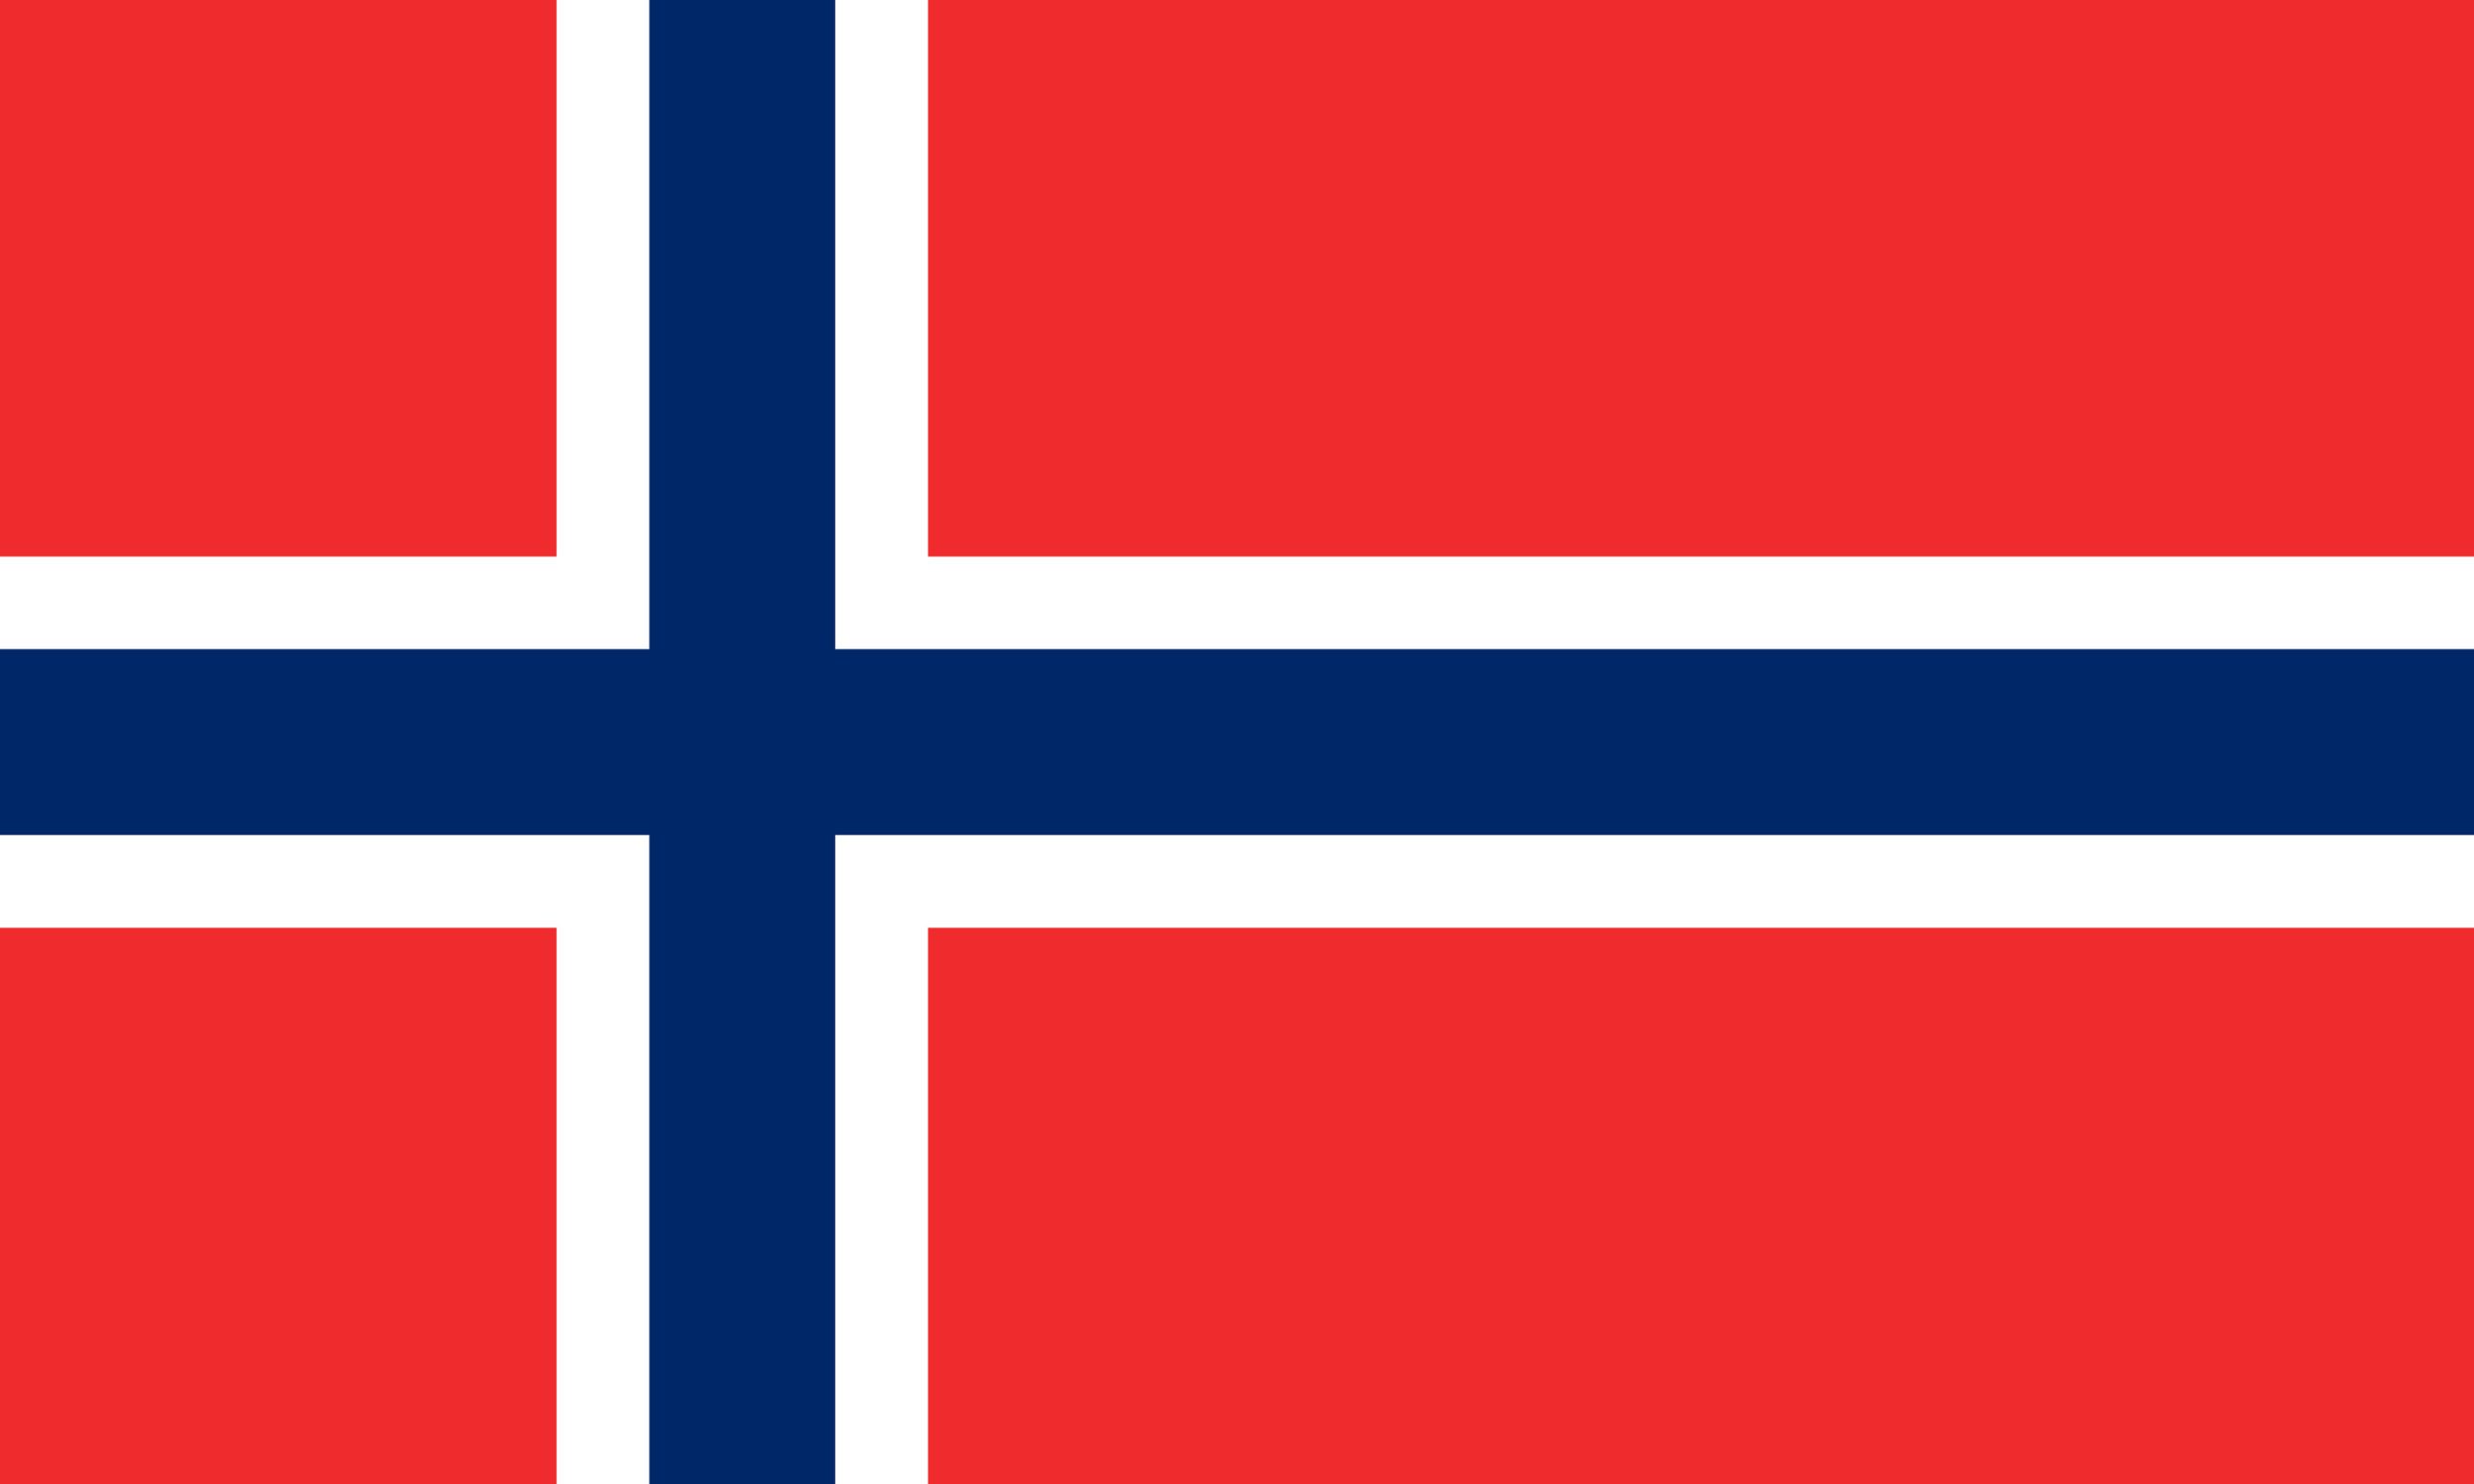 NOK – Norwegian Krone